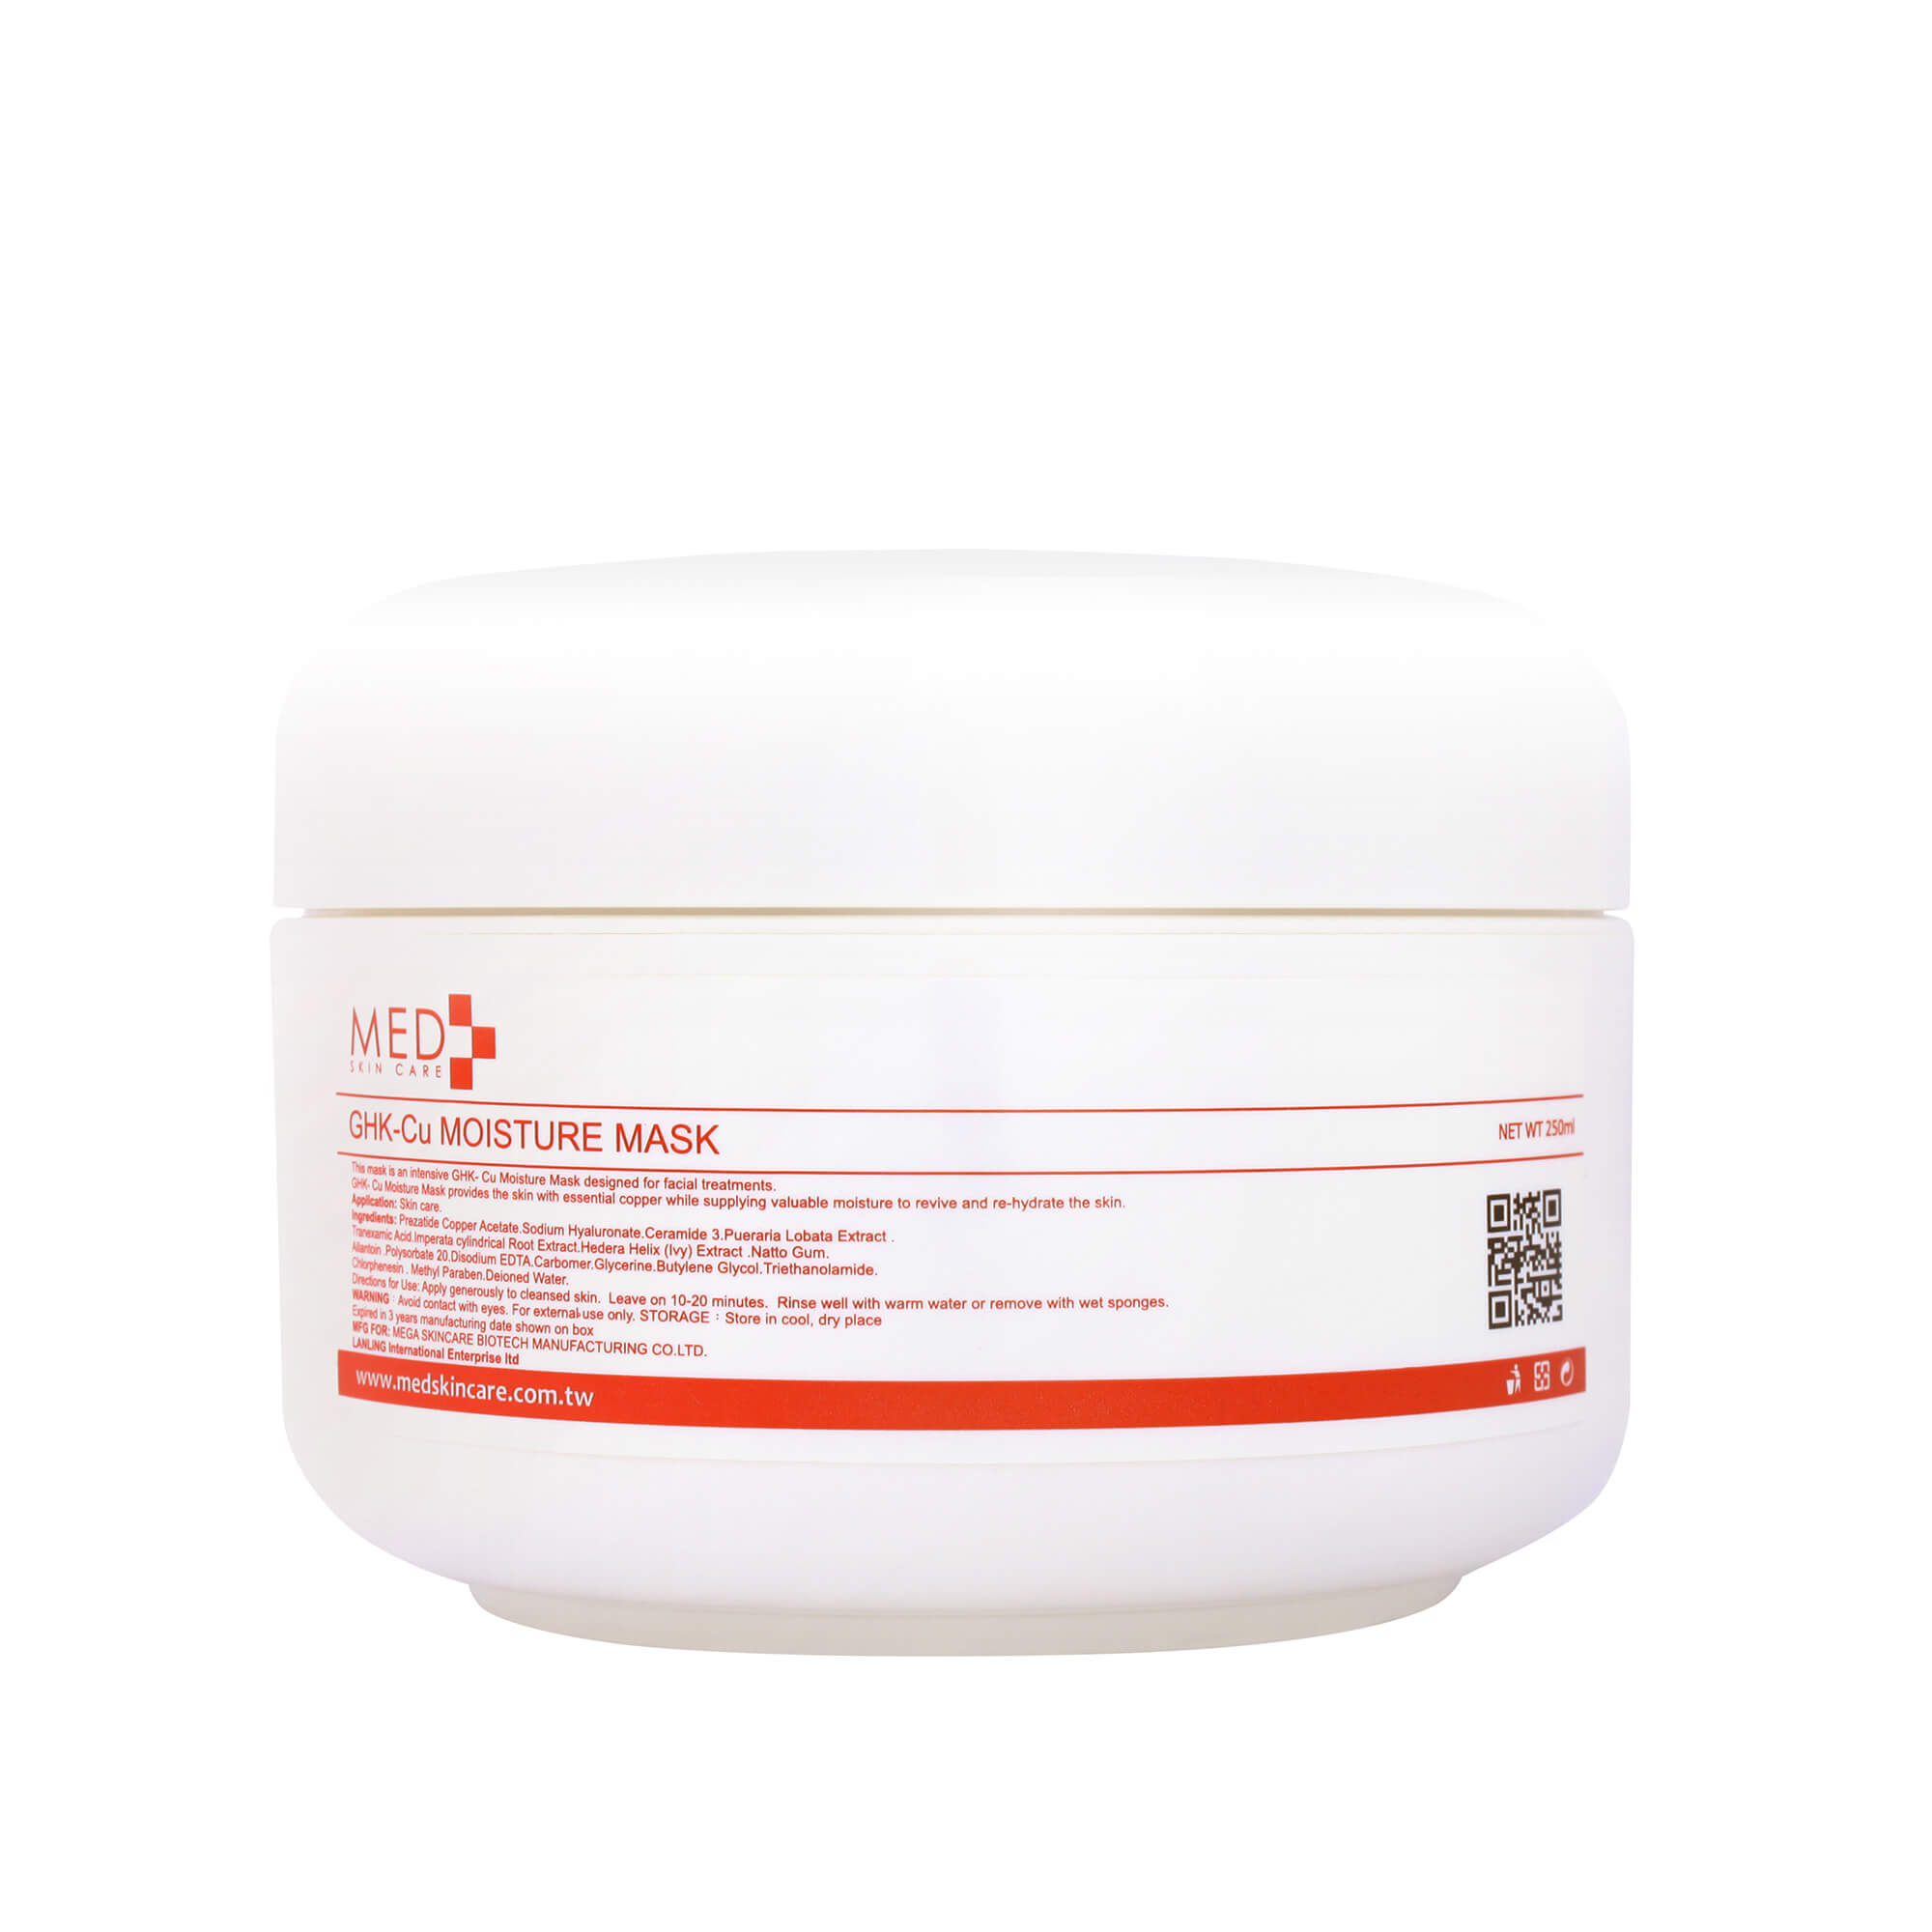 MED Skin Care GHK-Cu Moisture Mask 250 ml